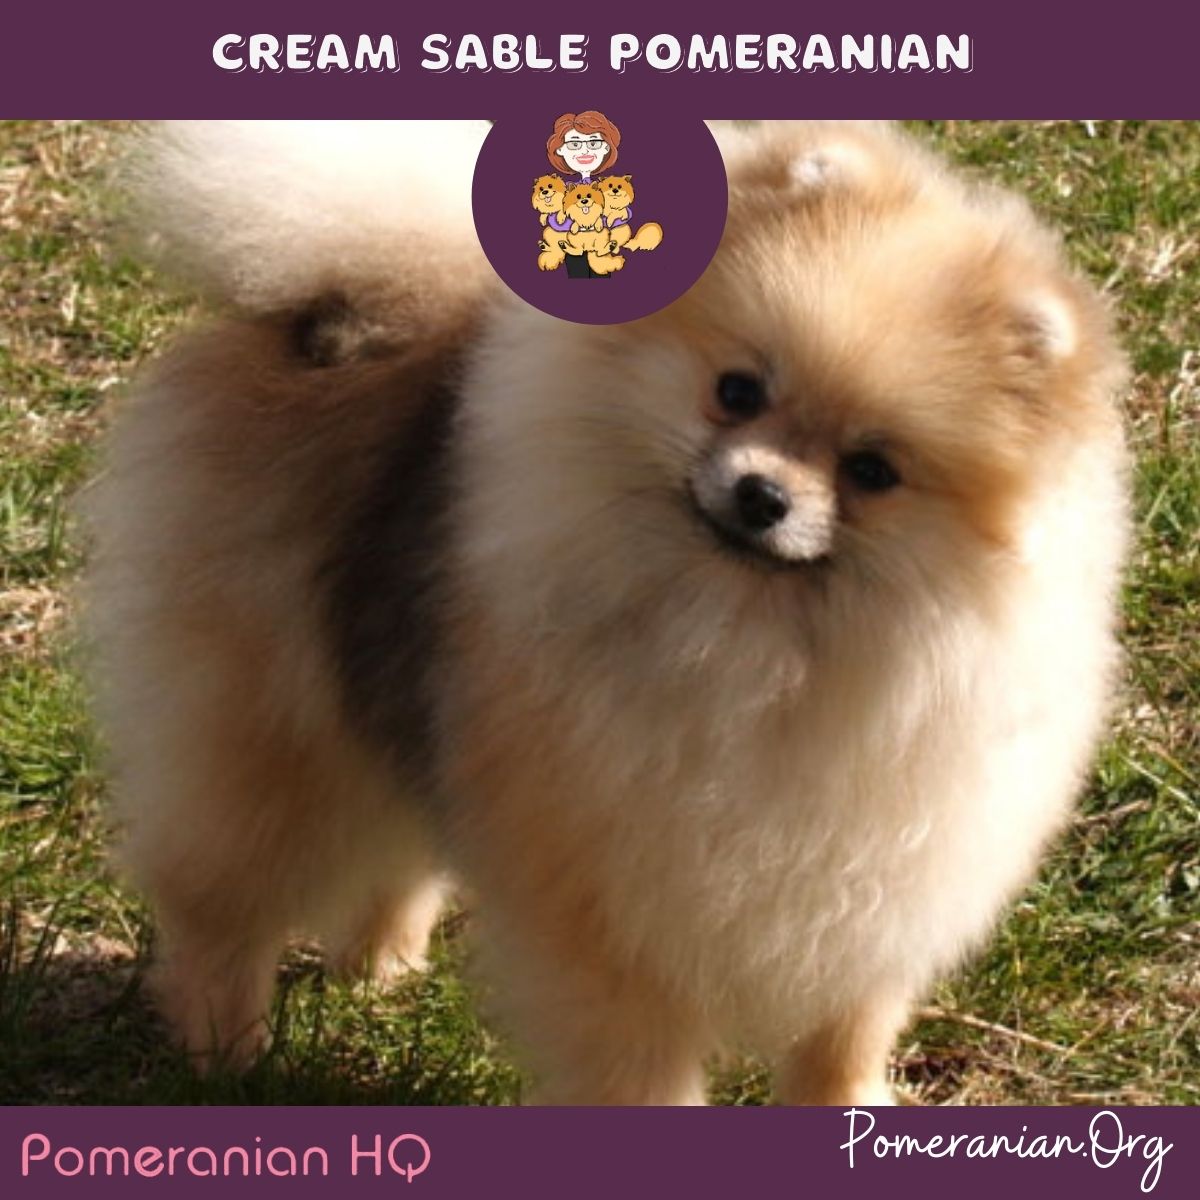 Cream Sable Pomeranian